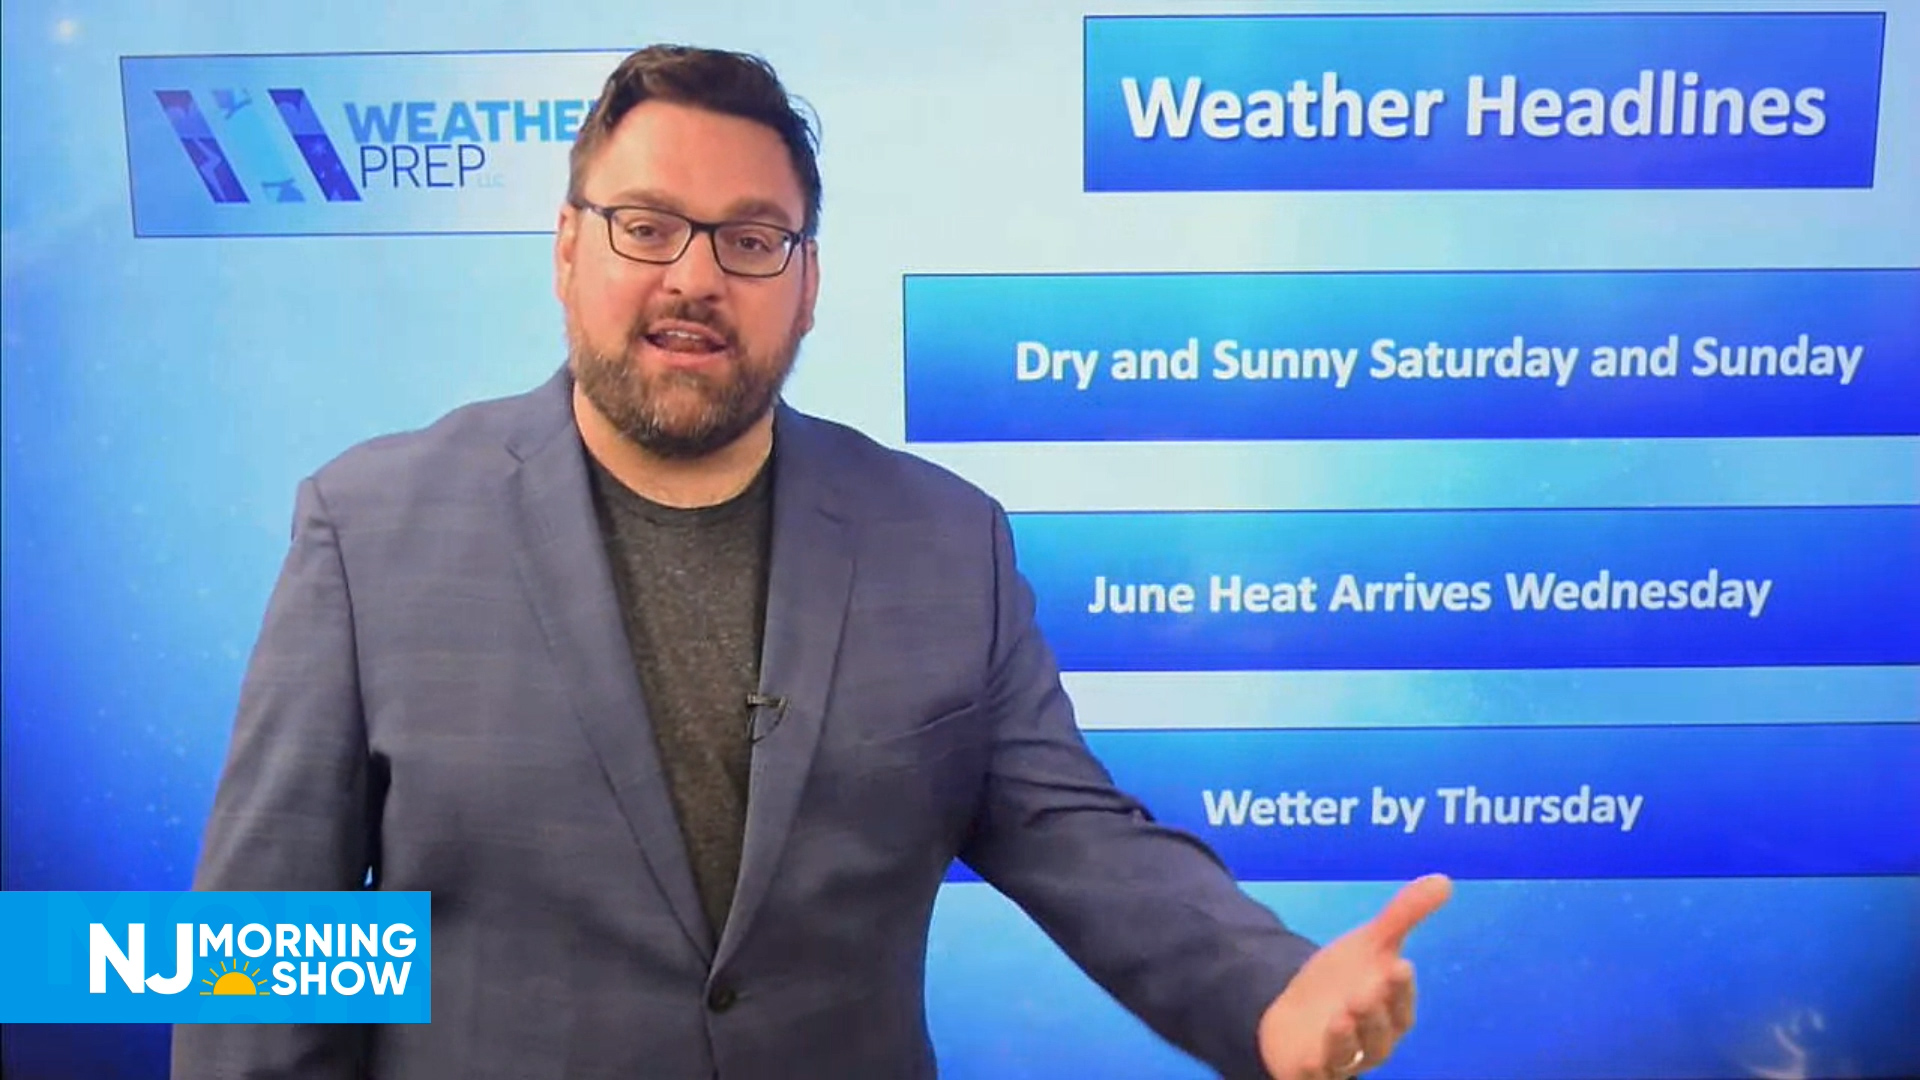 NJ Morning Show – Weekend Weather Headlines